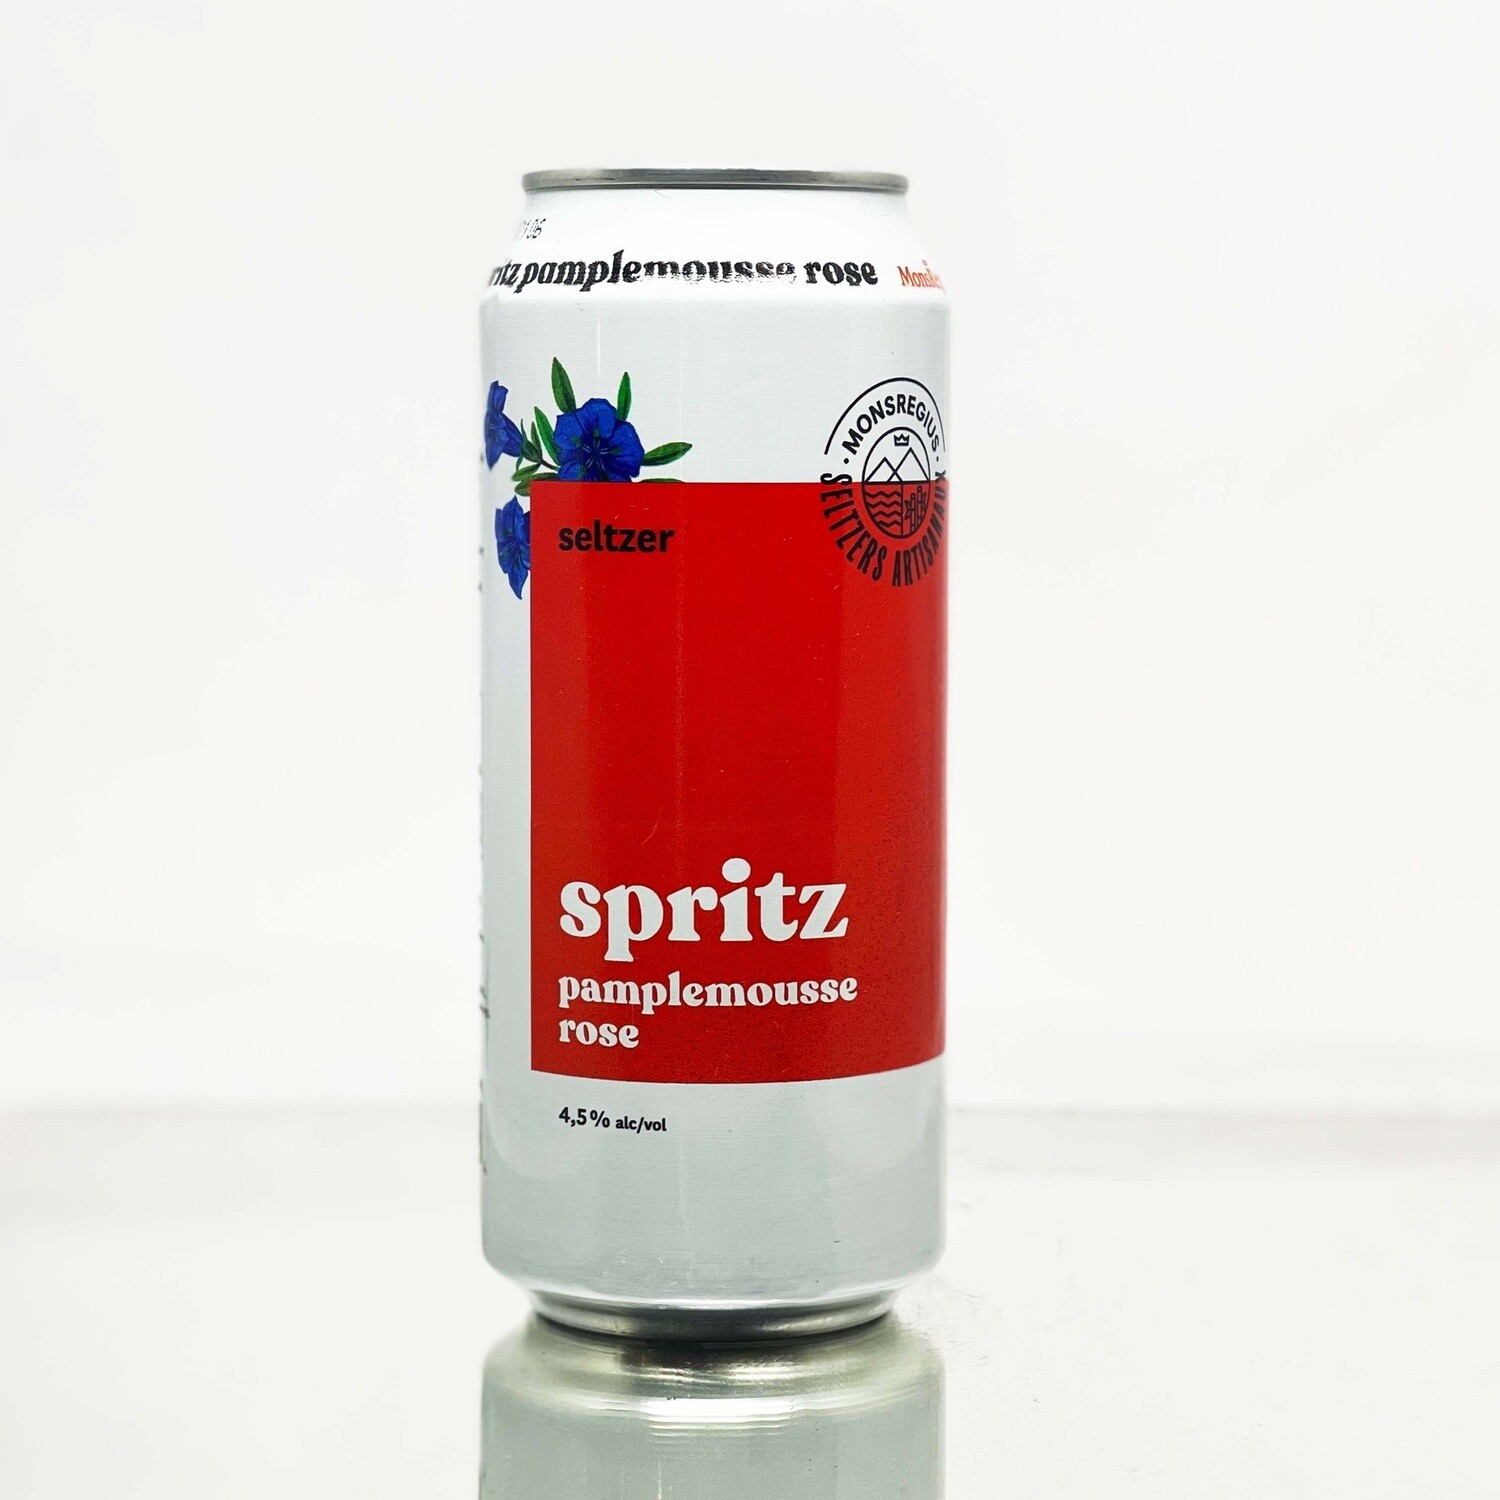 Monsregius - Seltzer Spritz Pamplemousse